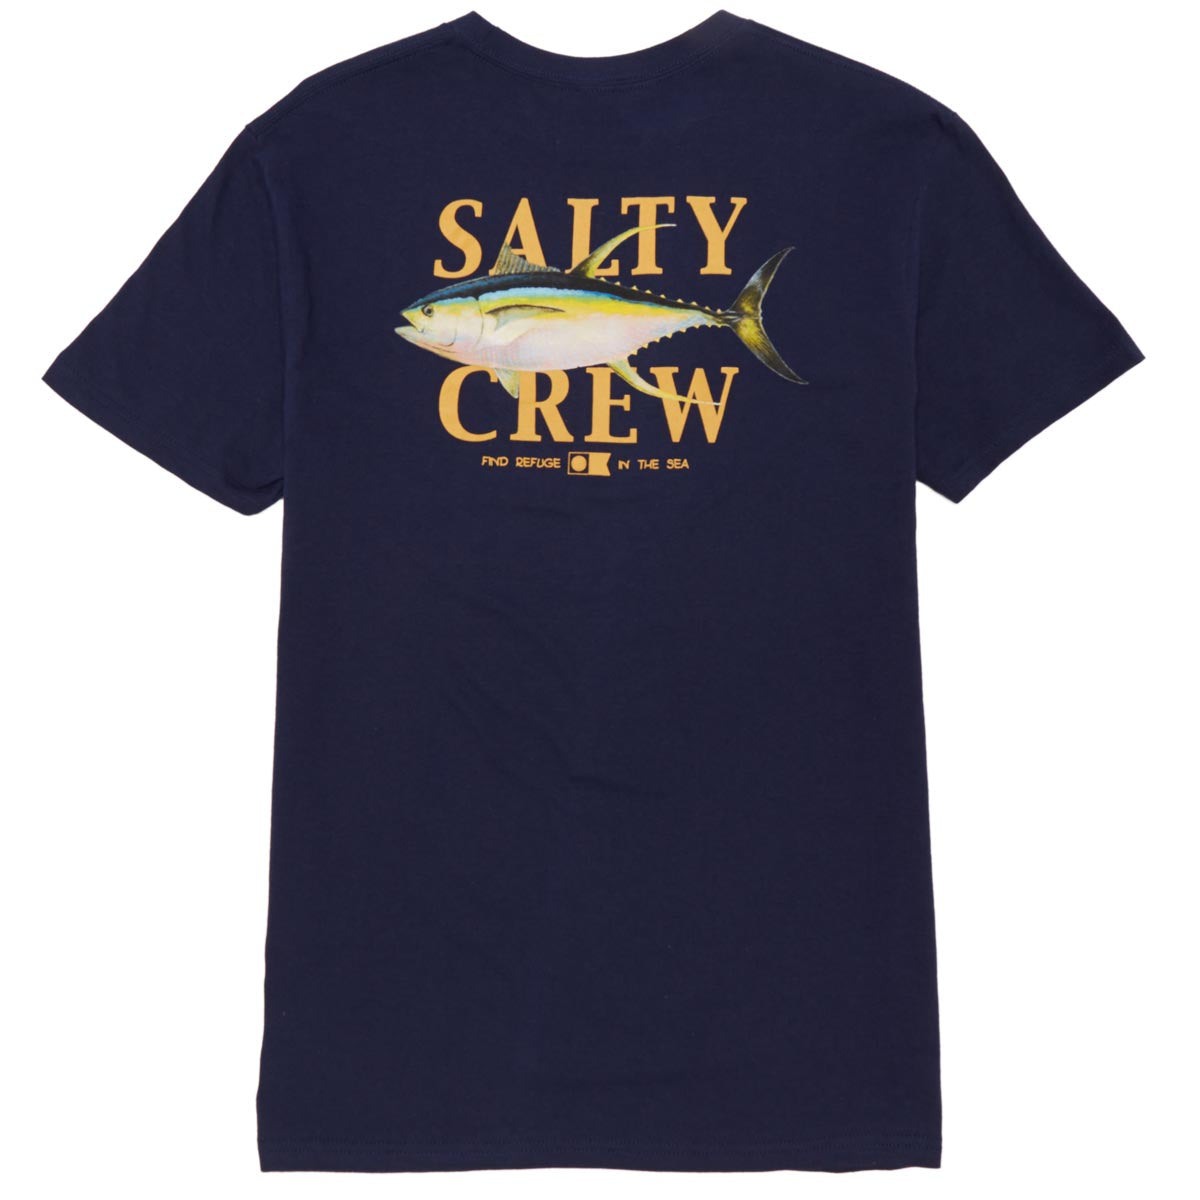 Salty Crew Yellowfin Classic T-Shirt - Navy image 1